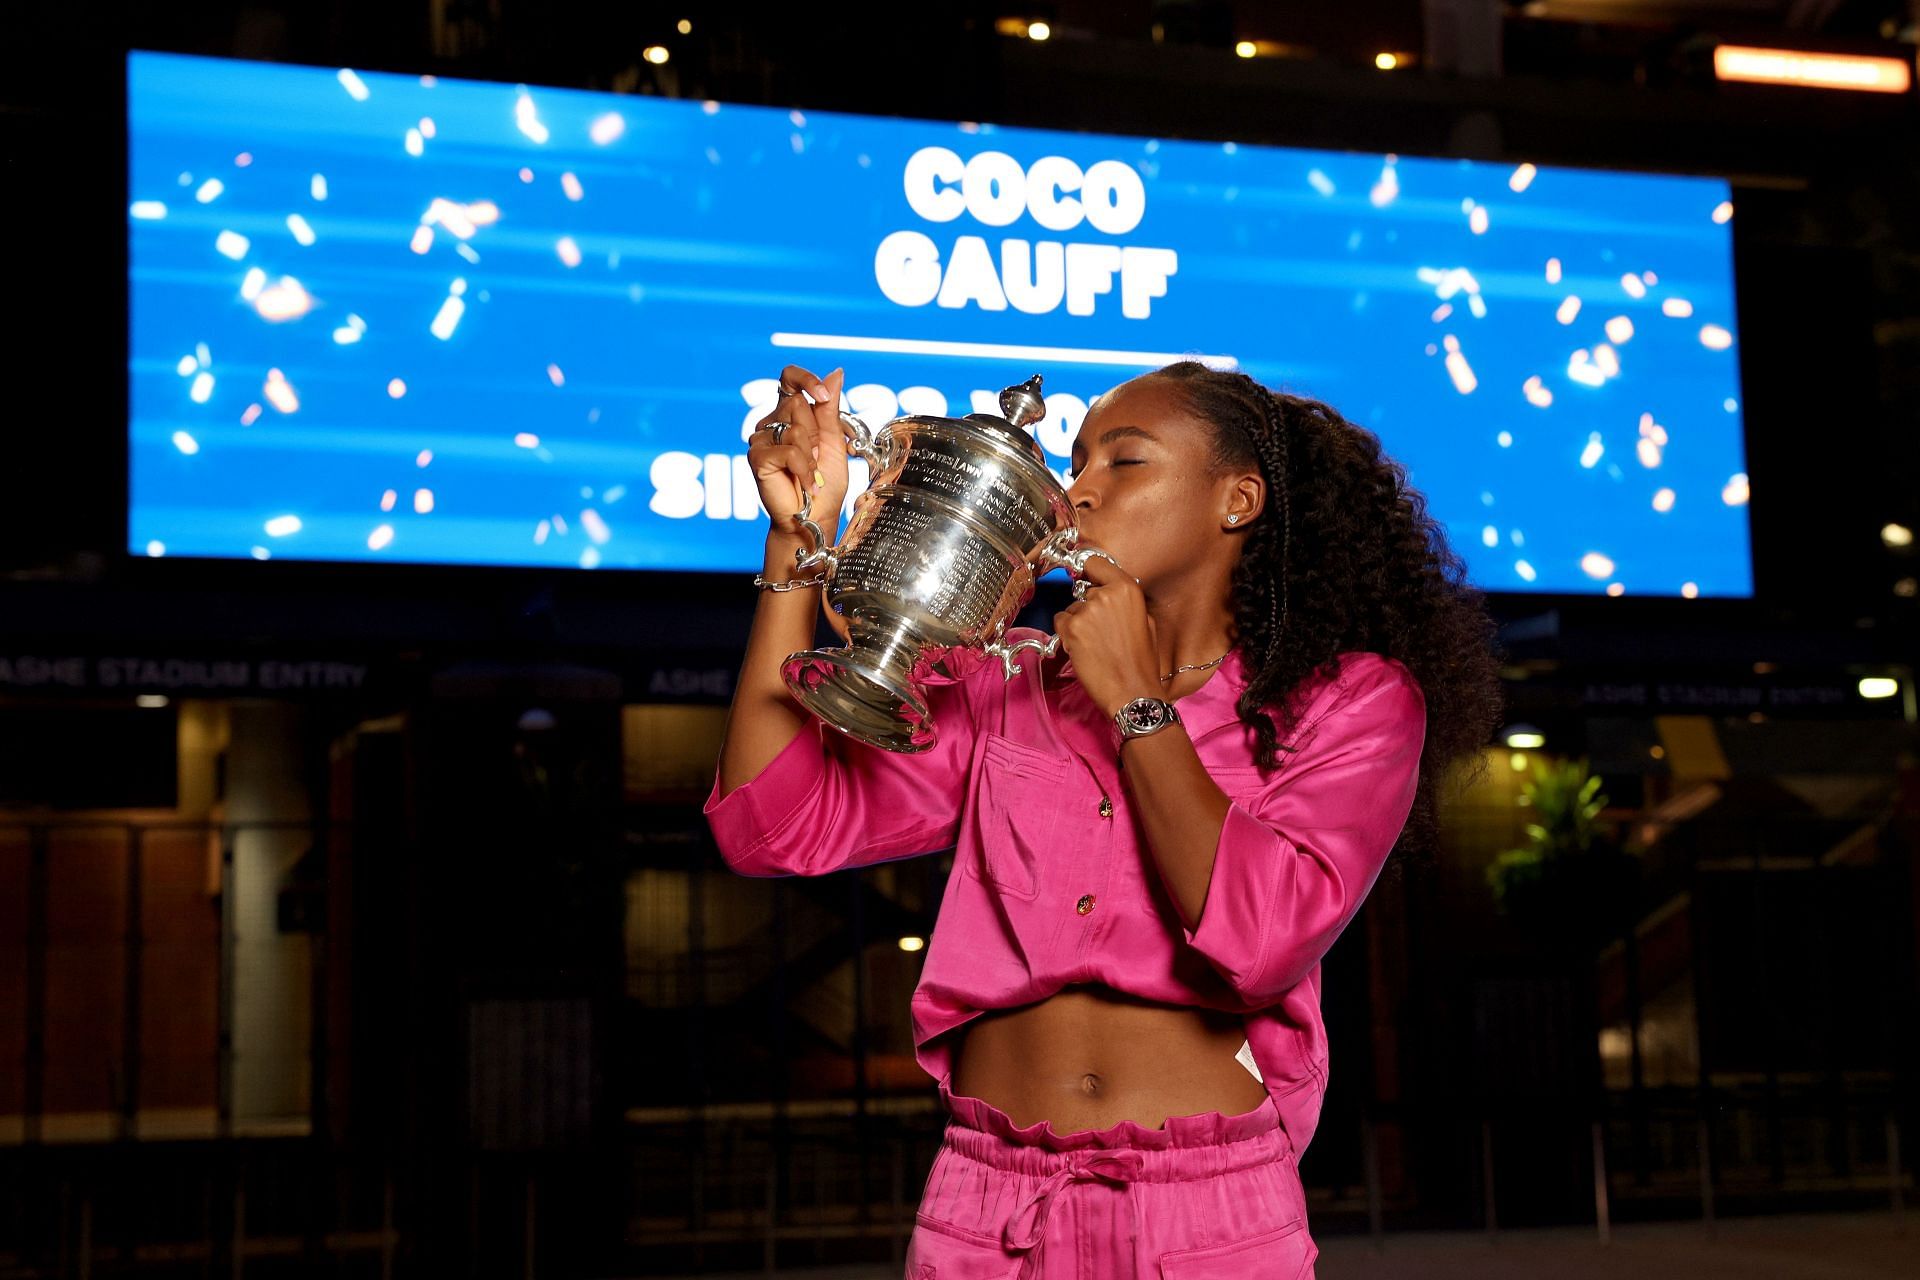 Gauff with her US Open trophy